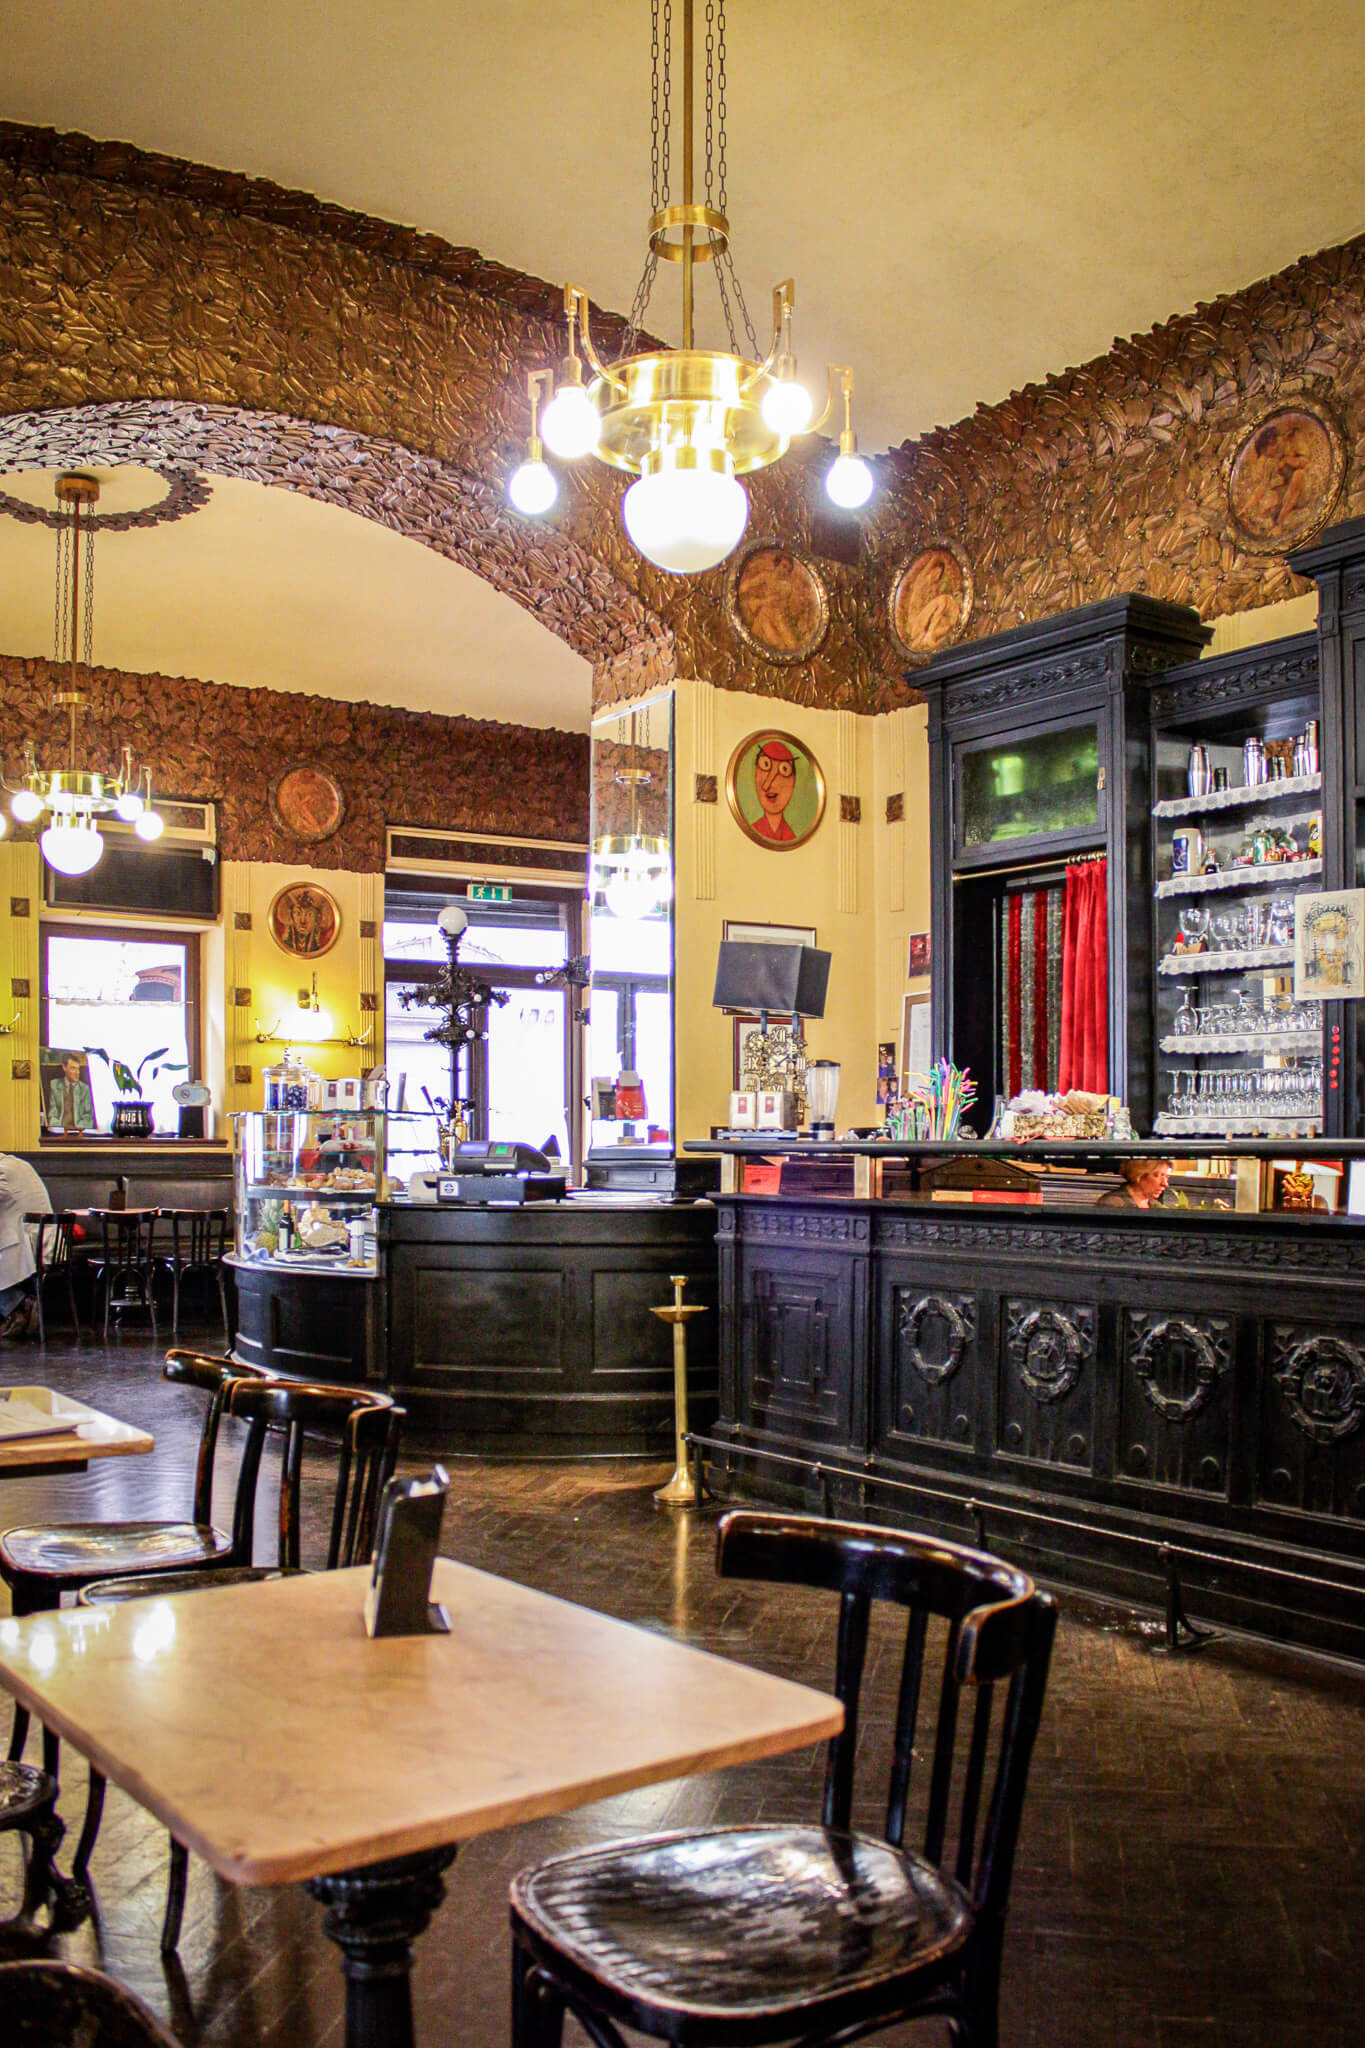 Interior of the historic Caffè San Marco in Trieste, Italy